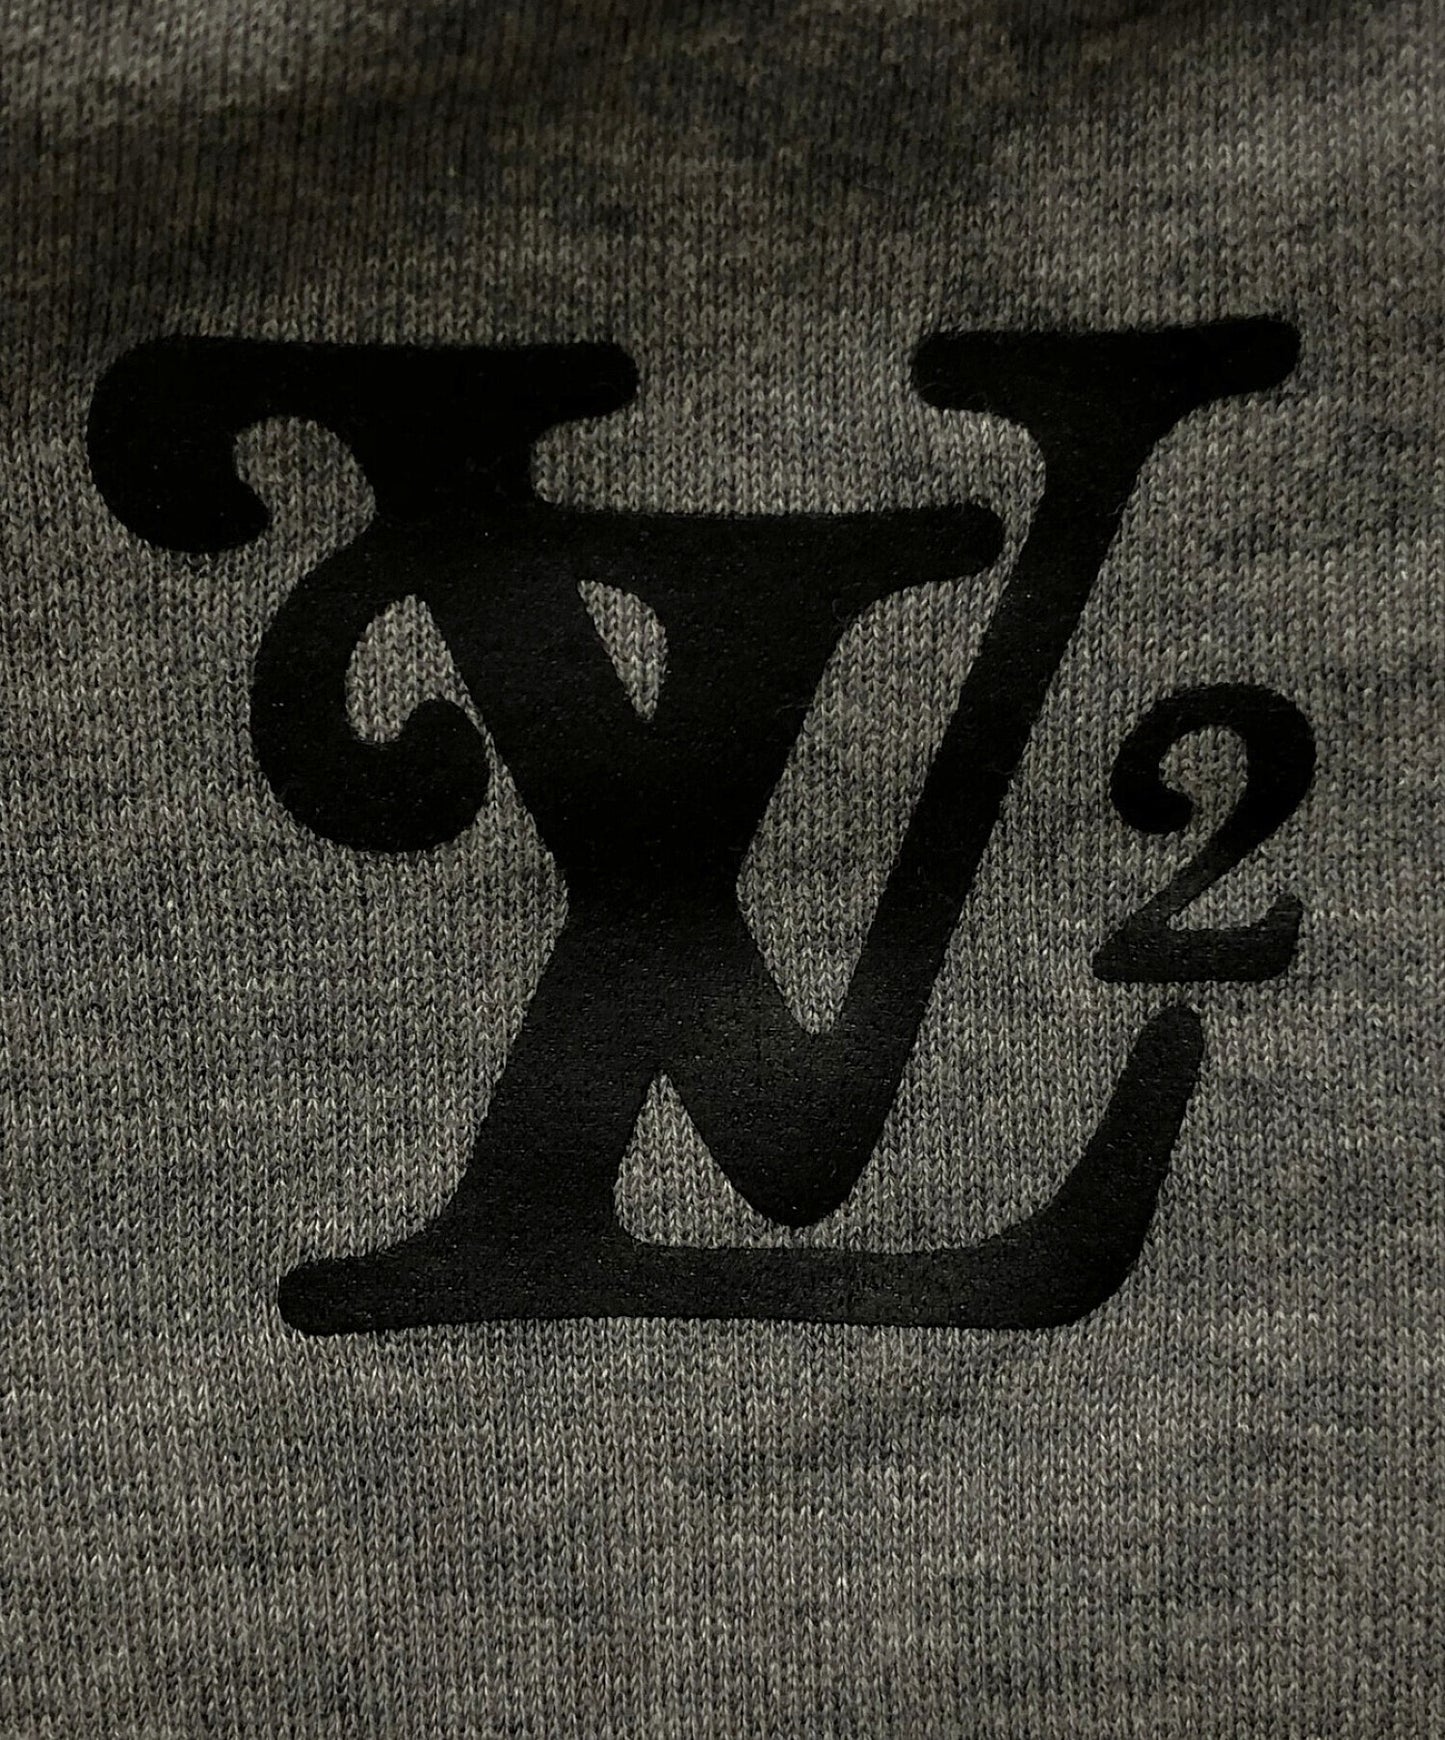 Louis Vuitton x Nigo Squared Grey Crewneck Sweatshirt